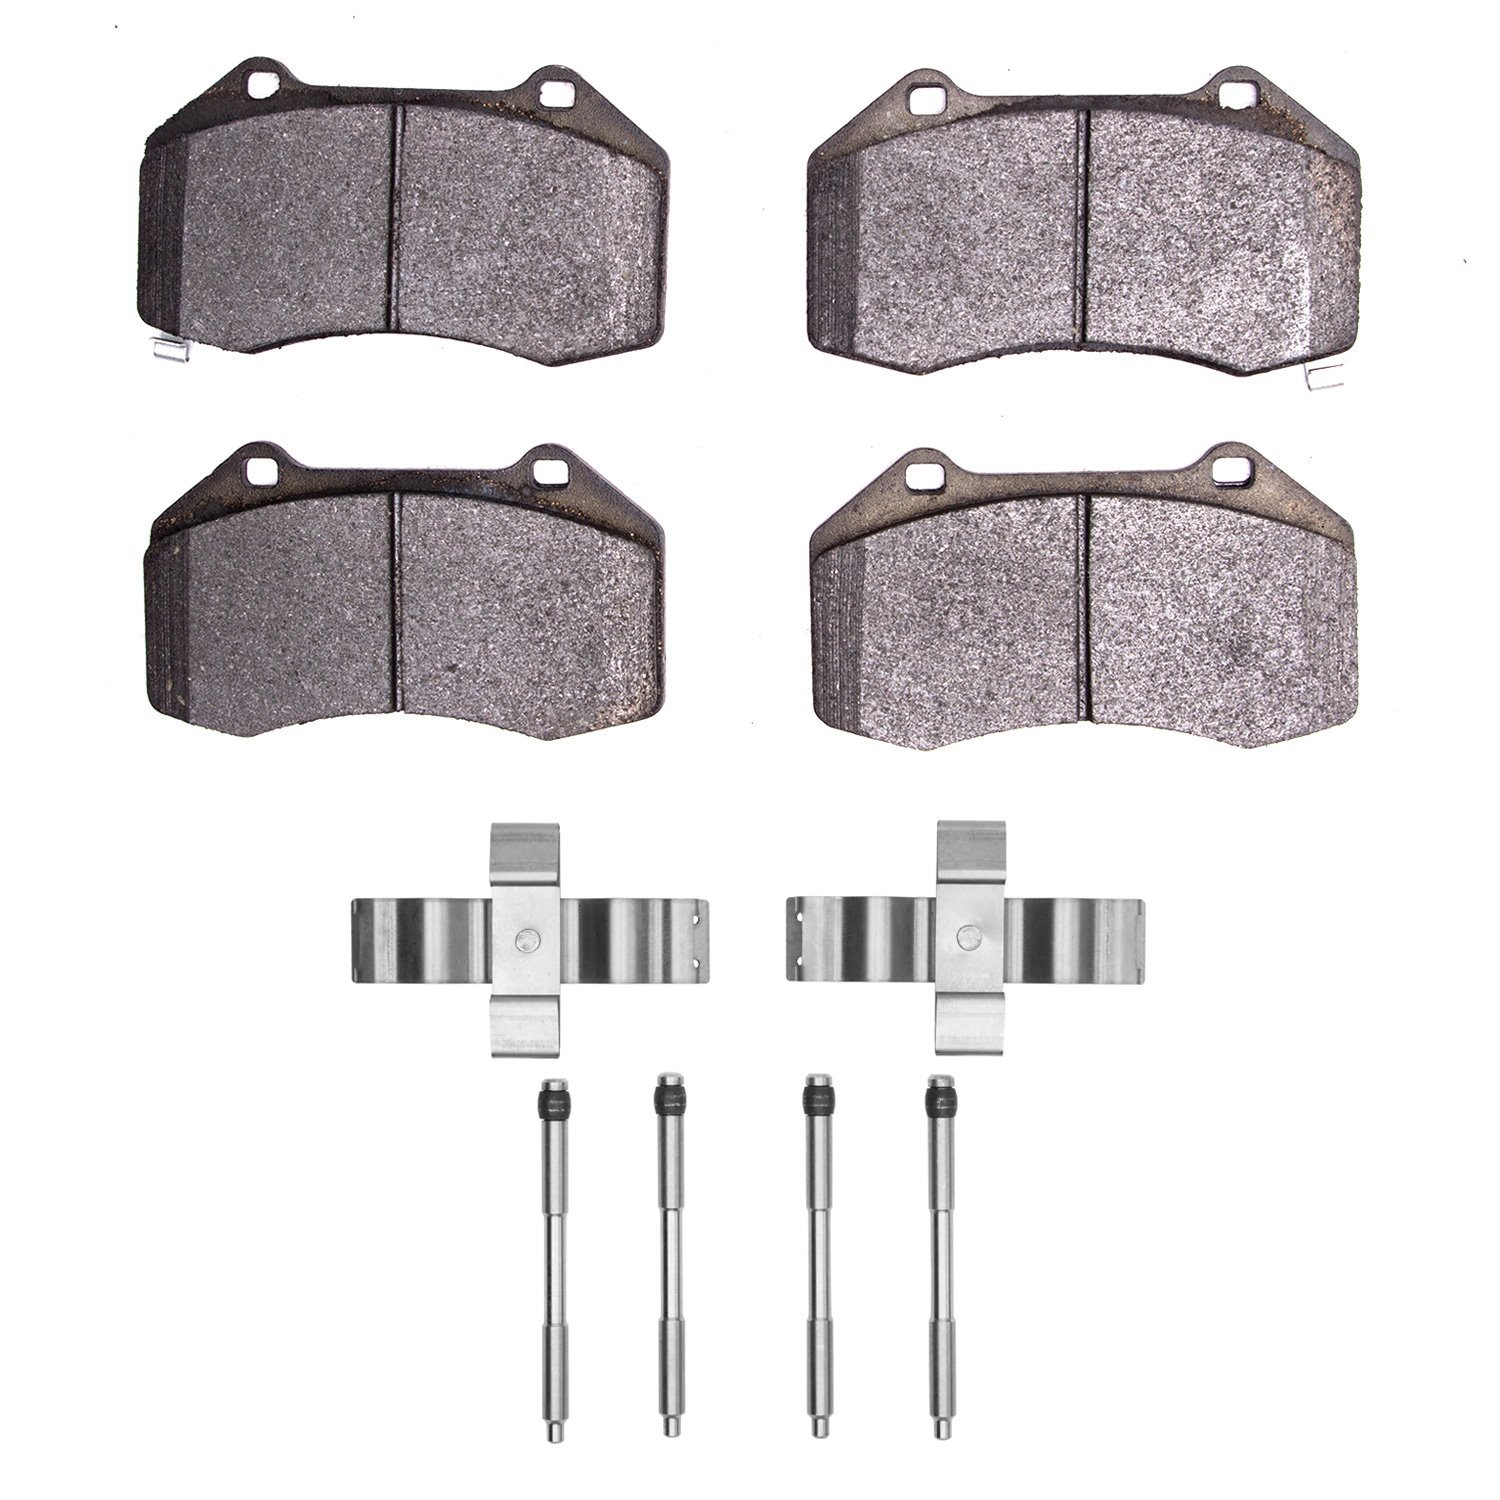 1310-1379-21 3000-Series Ceramic Brake Pads & Hardware Kit, Fits Select Multiple Makes/Models, Position: Front